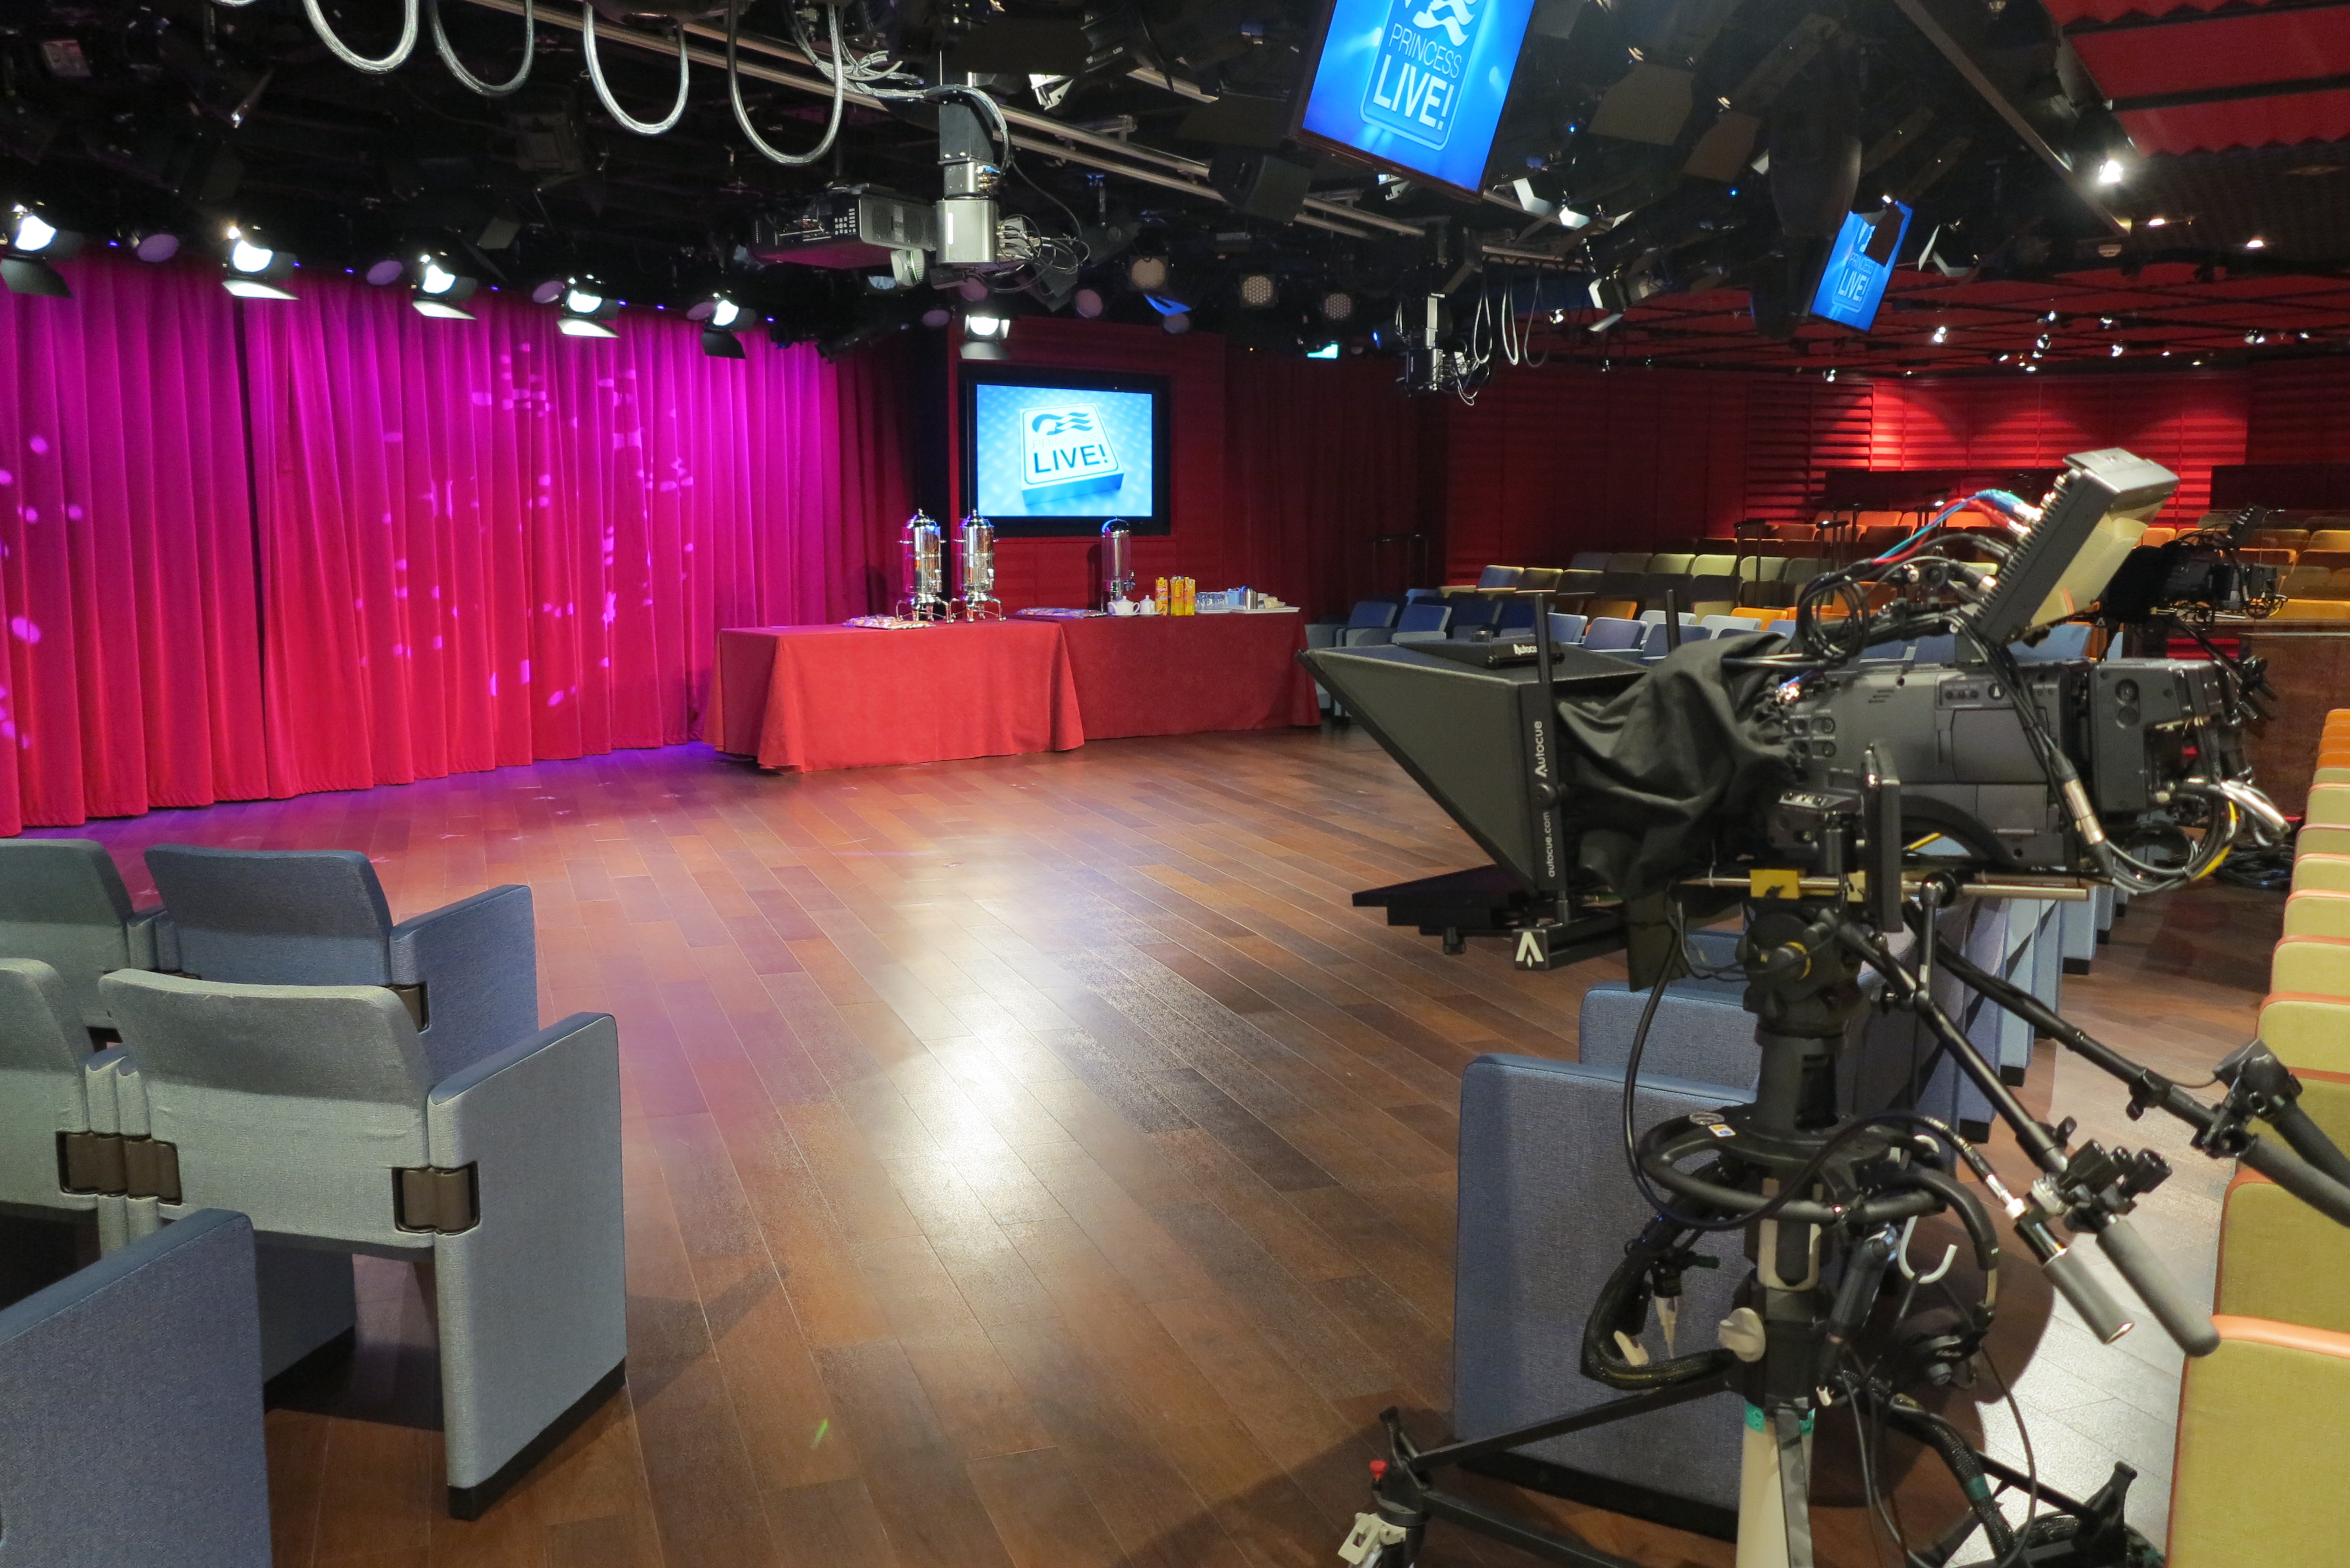 Take your cue: The Princess Live! TV studios